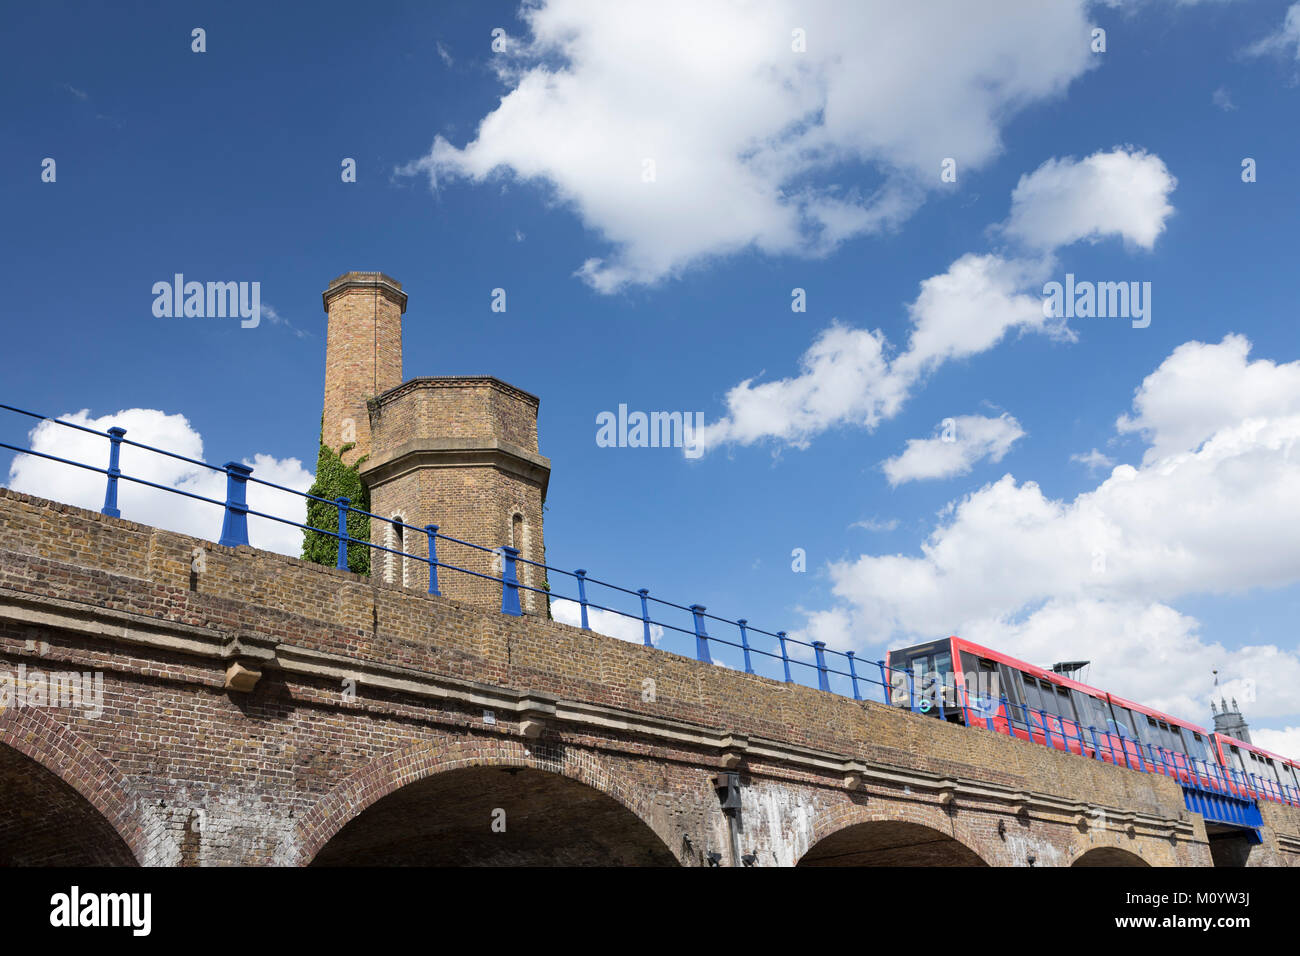 Railway bridge at Limehouse and overland train Stock Photo